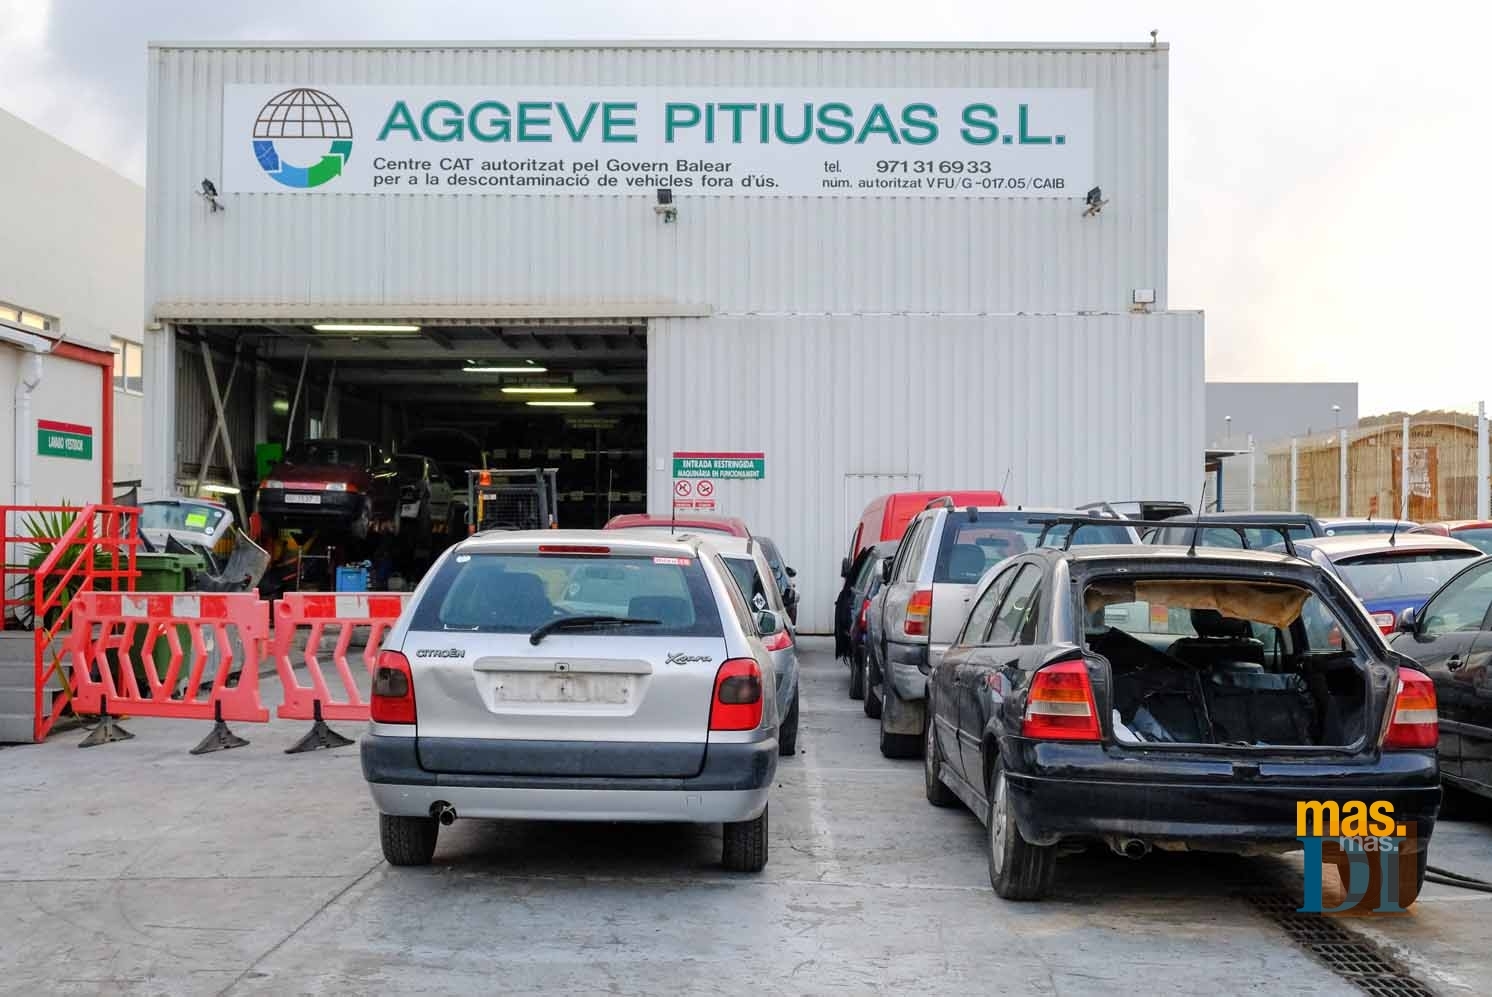 Aggeve Pitiusas S.L., baja definitiva de vehículos sin coste